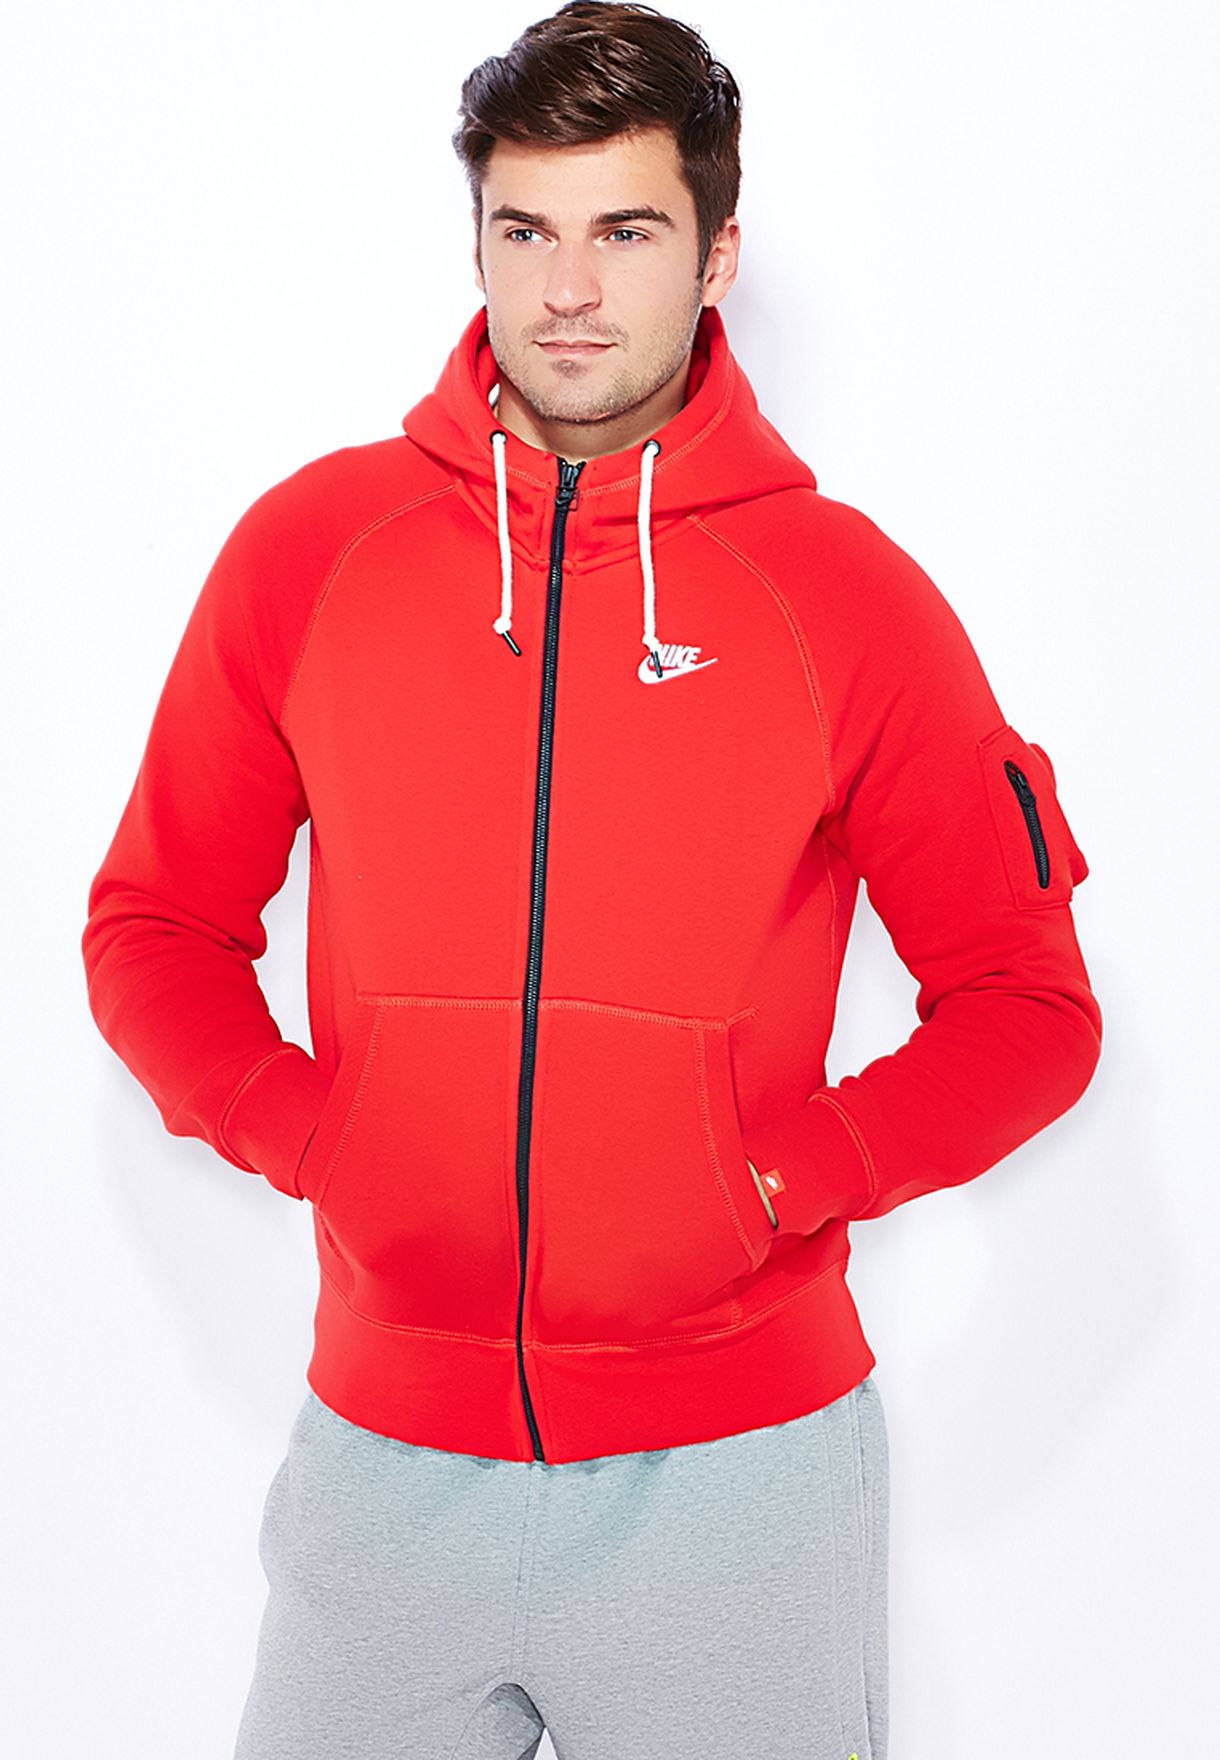 Rafflesia Arnoldi Exquisito Multa Buy Nike red AW77 Fleece Hoodie for Men in MENA, Worldwide